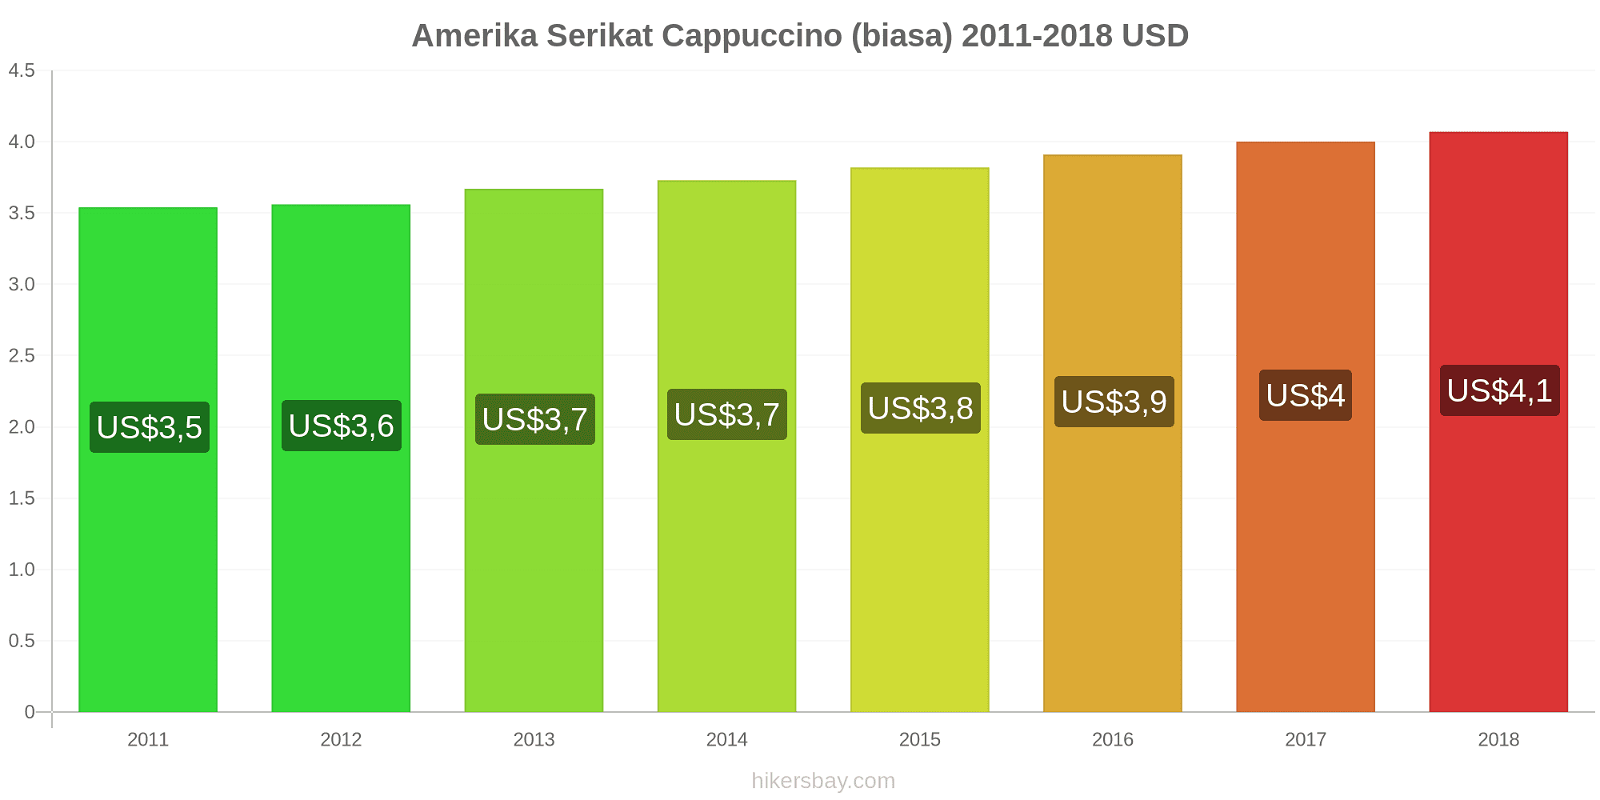 Amerika Serikat perubahan harga Cappuccino hikersbay.com